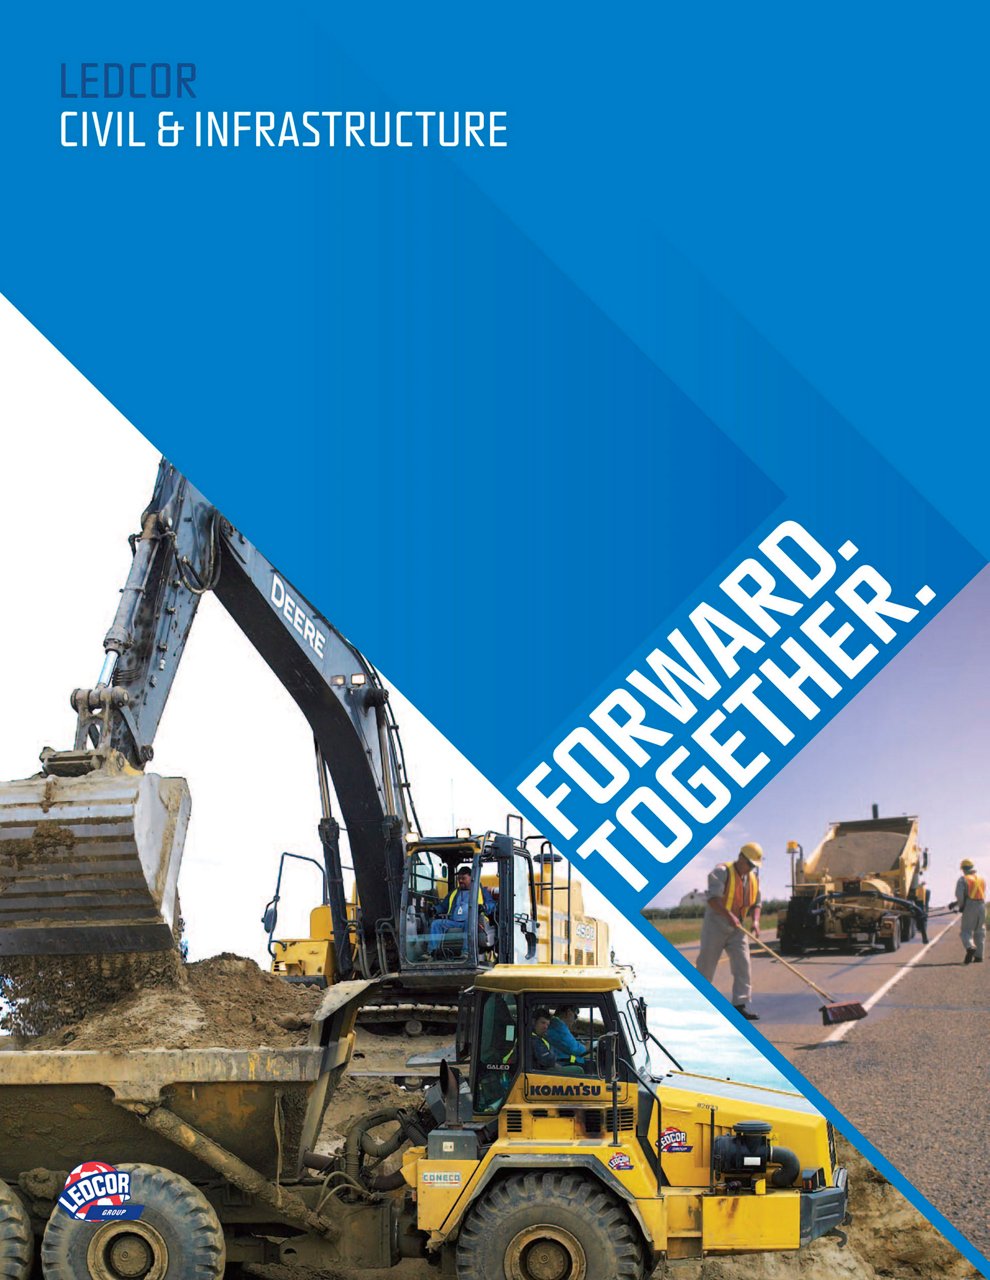 CI_Ledcor CivilInfrastructure Canada Brochure_3DISSUE_FINAL_AR.indd, CI_Ledcor CivilInfrastructure Canada Brochure_3DISSUE_FINAL_AR.i